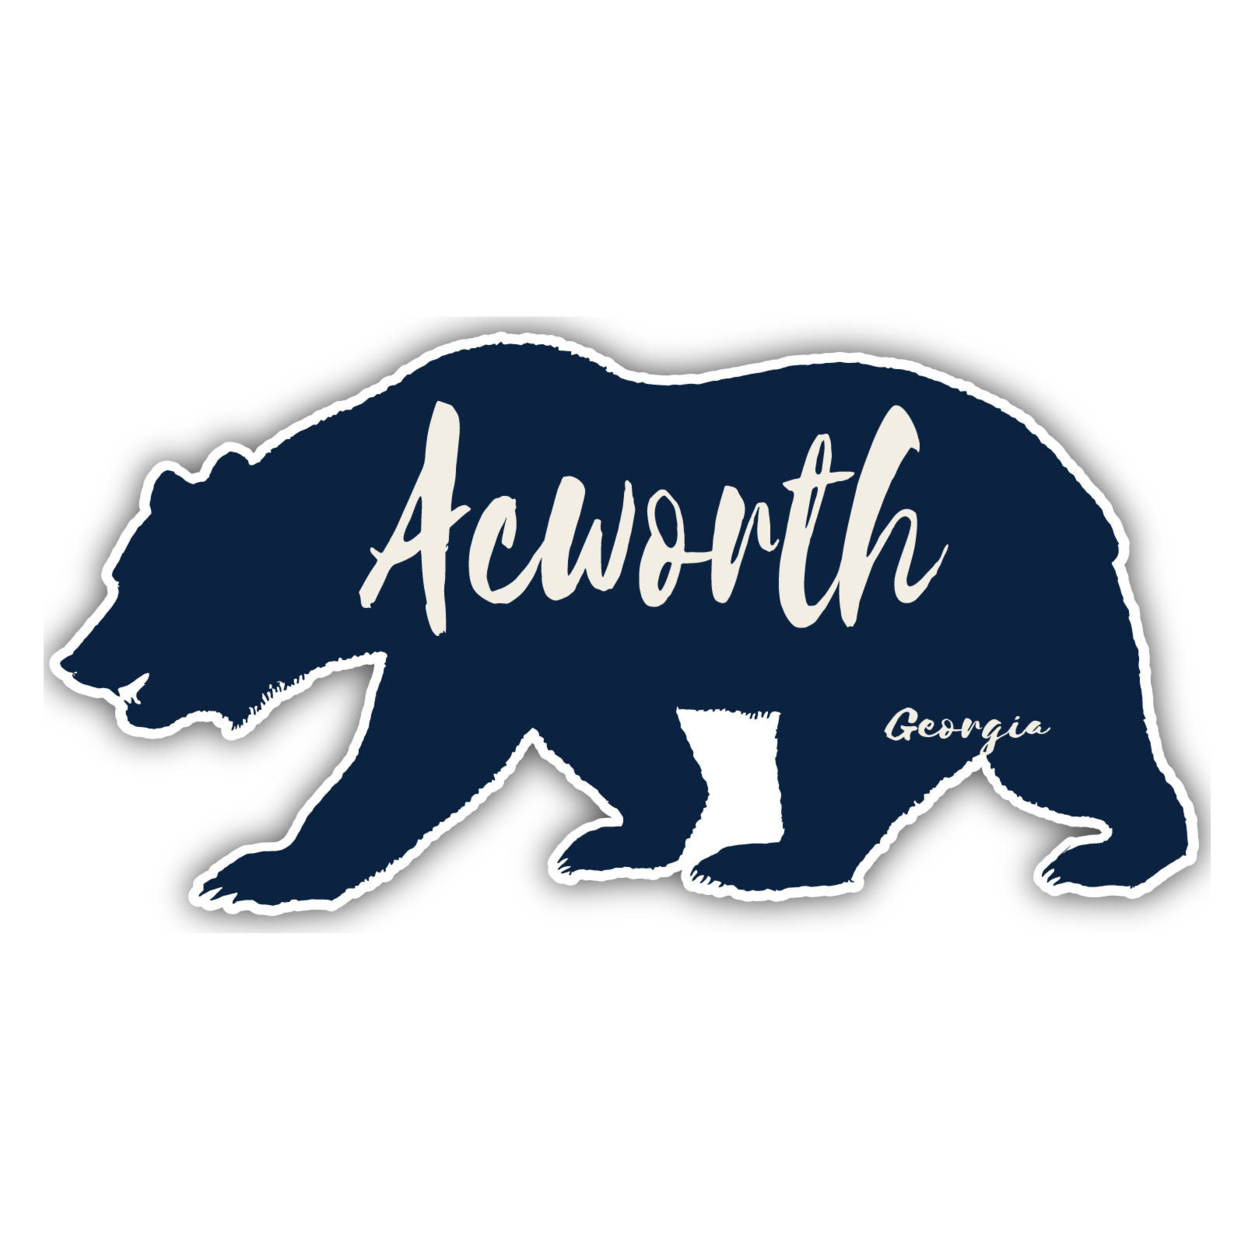 Acworth Georgia Souvenir Decorative Stickers (Choose Theme And Size) - Single Unit, 8-Inch, Bear